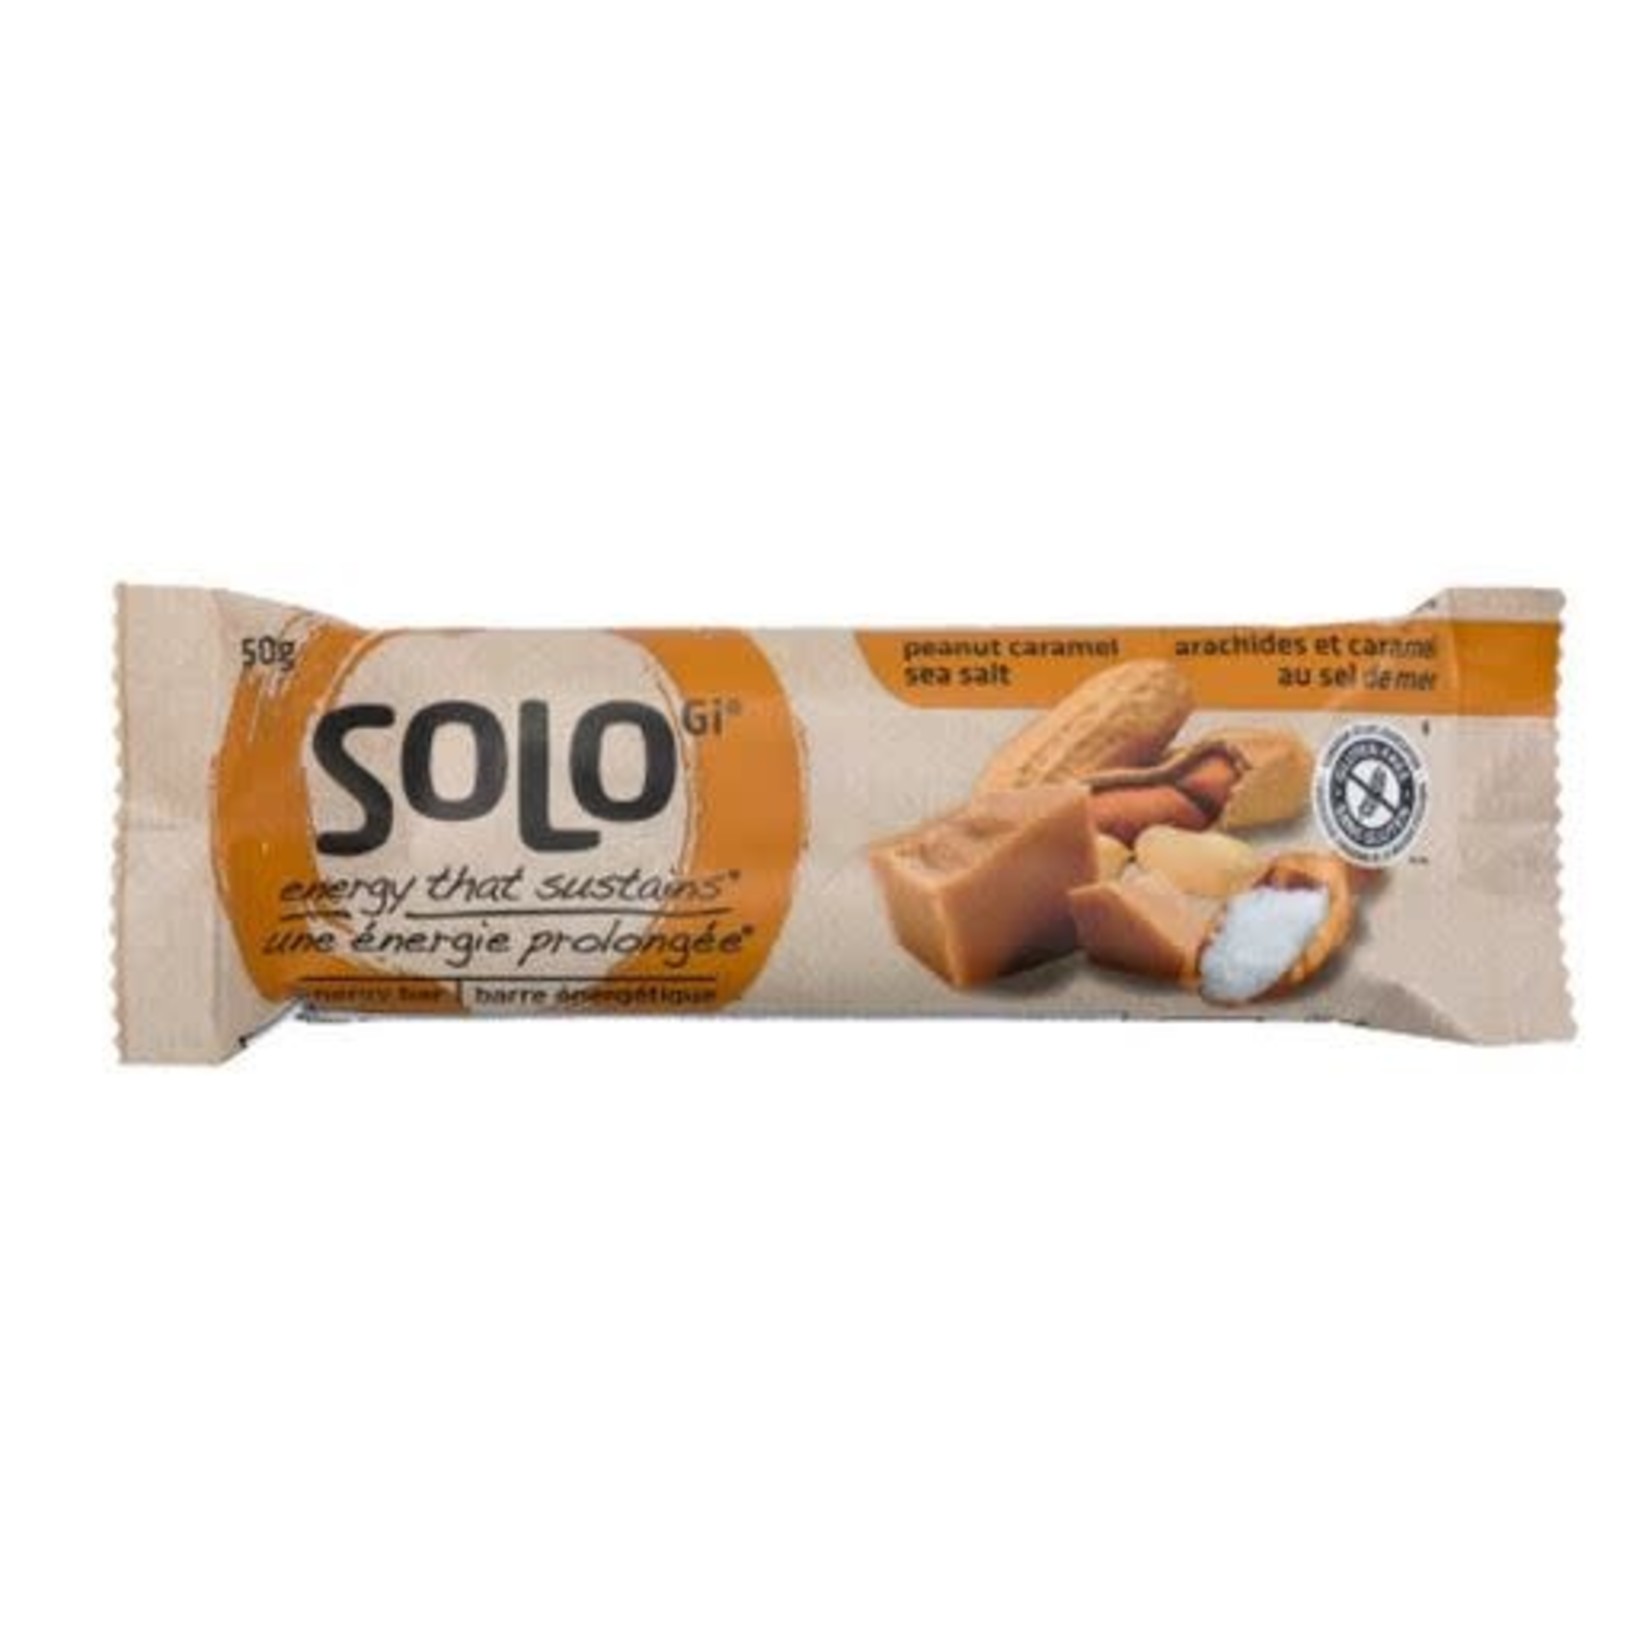 Solo Energy Bar Peanut Caramel Sea Salt Box 0f 12